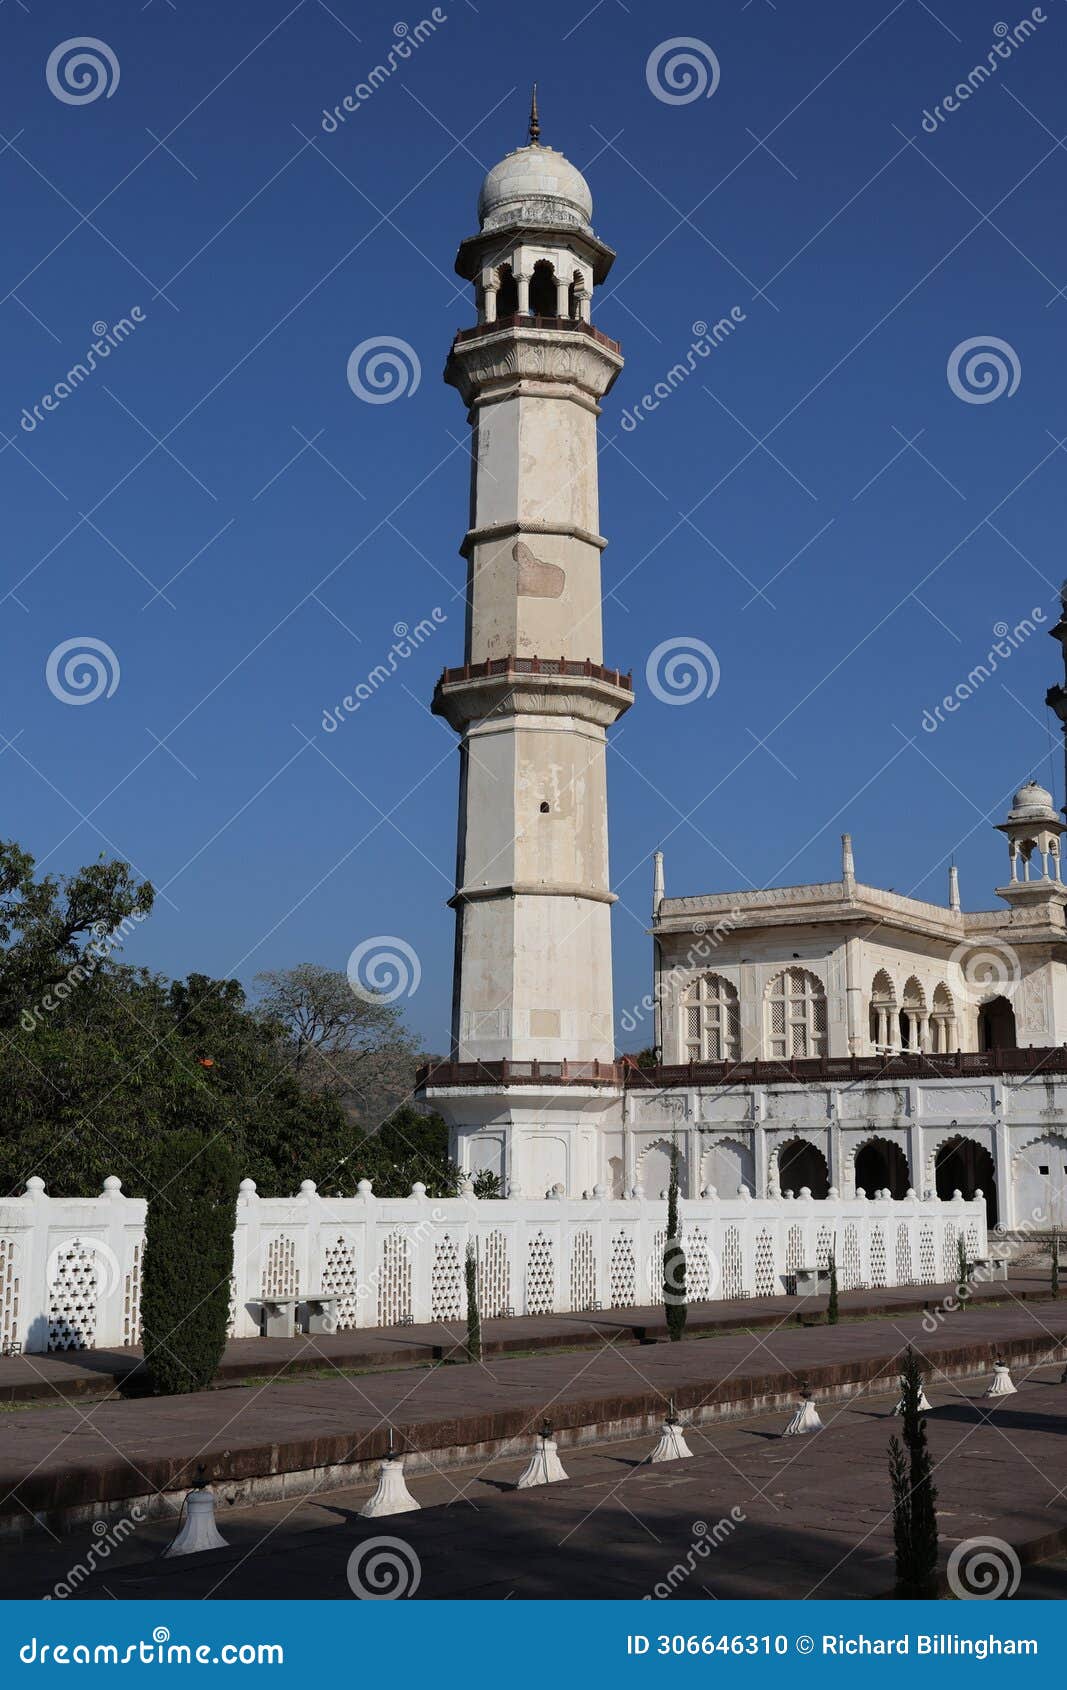 minaret, bini-ka maqbaba mausoleum, aurangabad, maharashtra, india